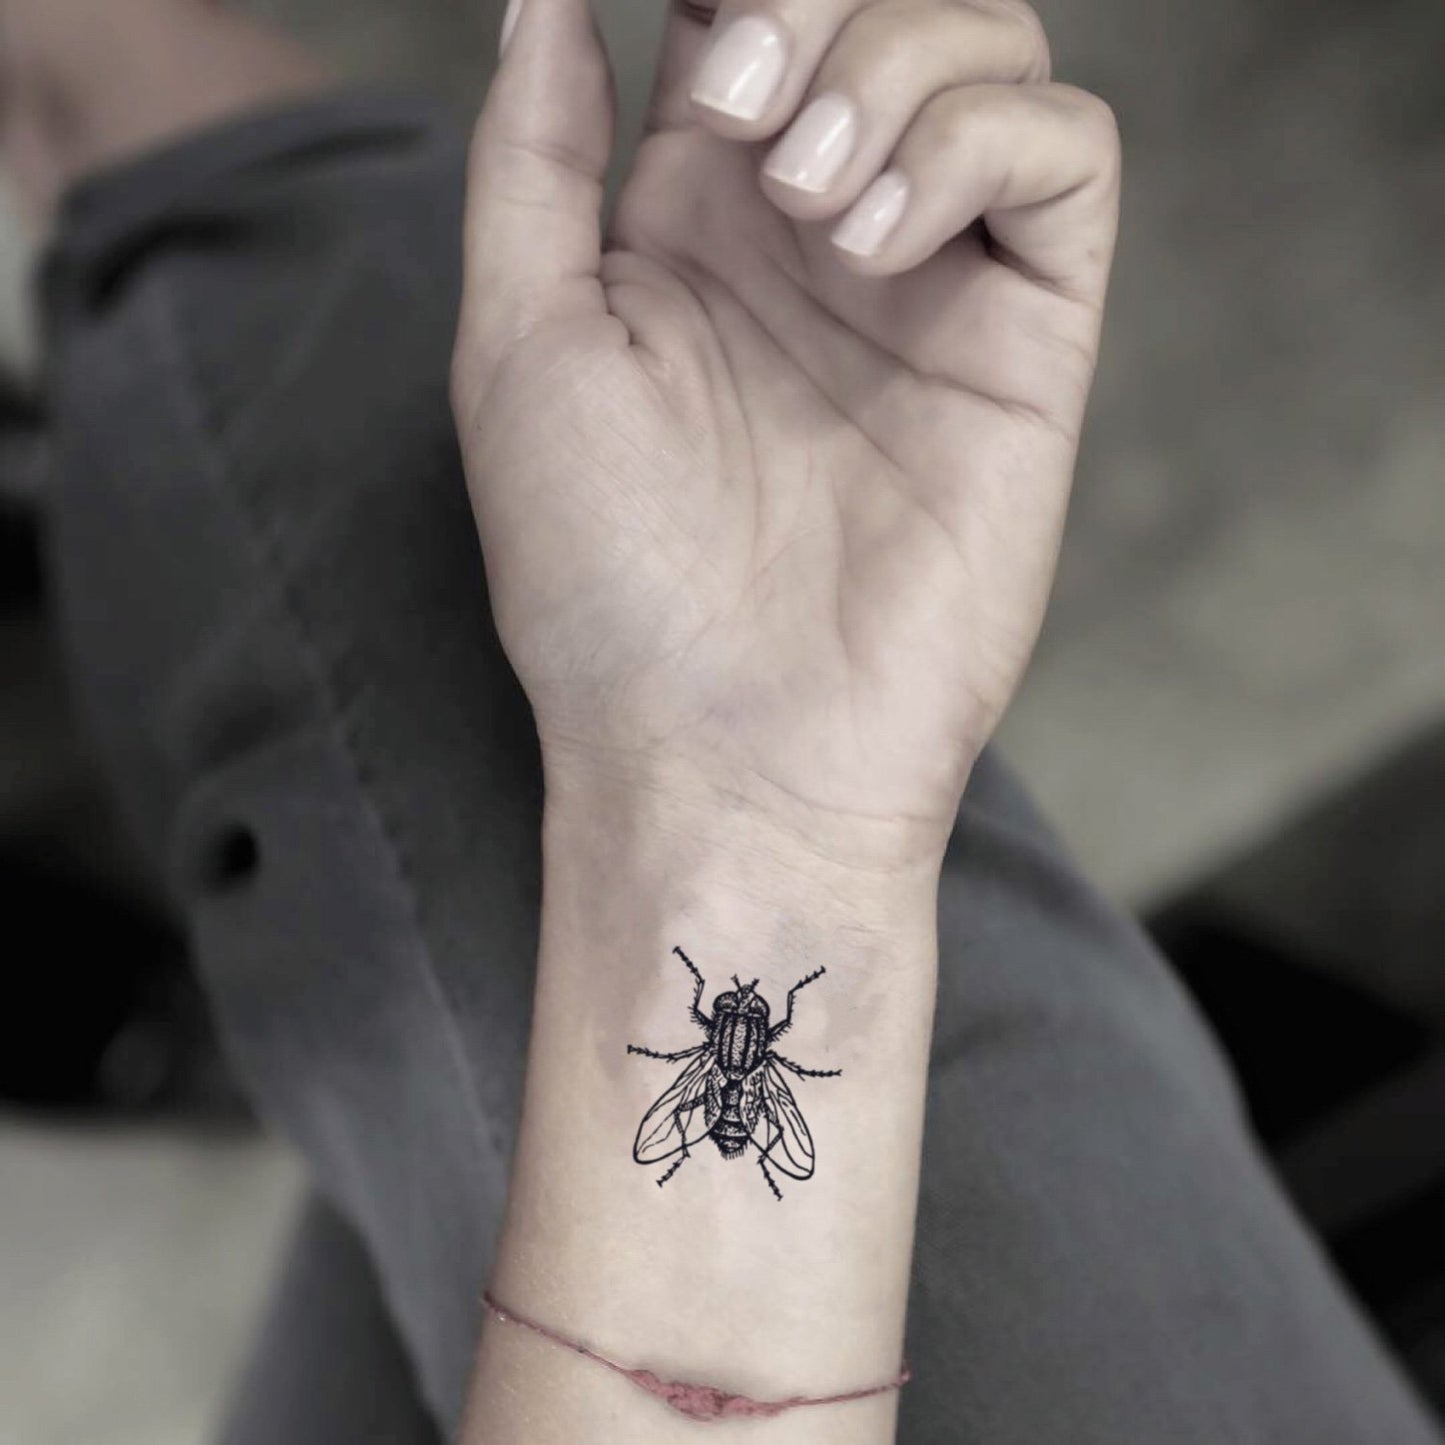 fake small fly animal temporary tattoo sticker design idea on wrist